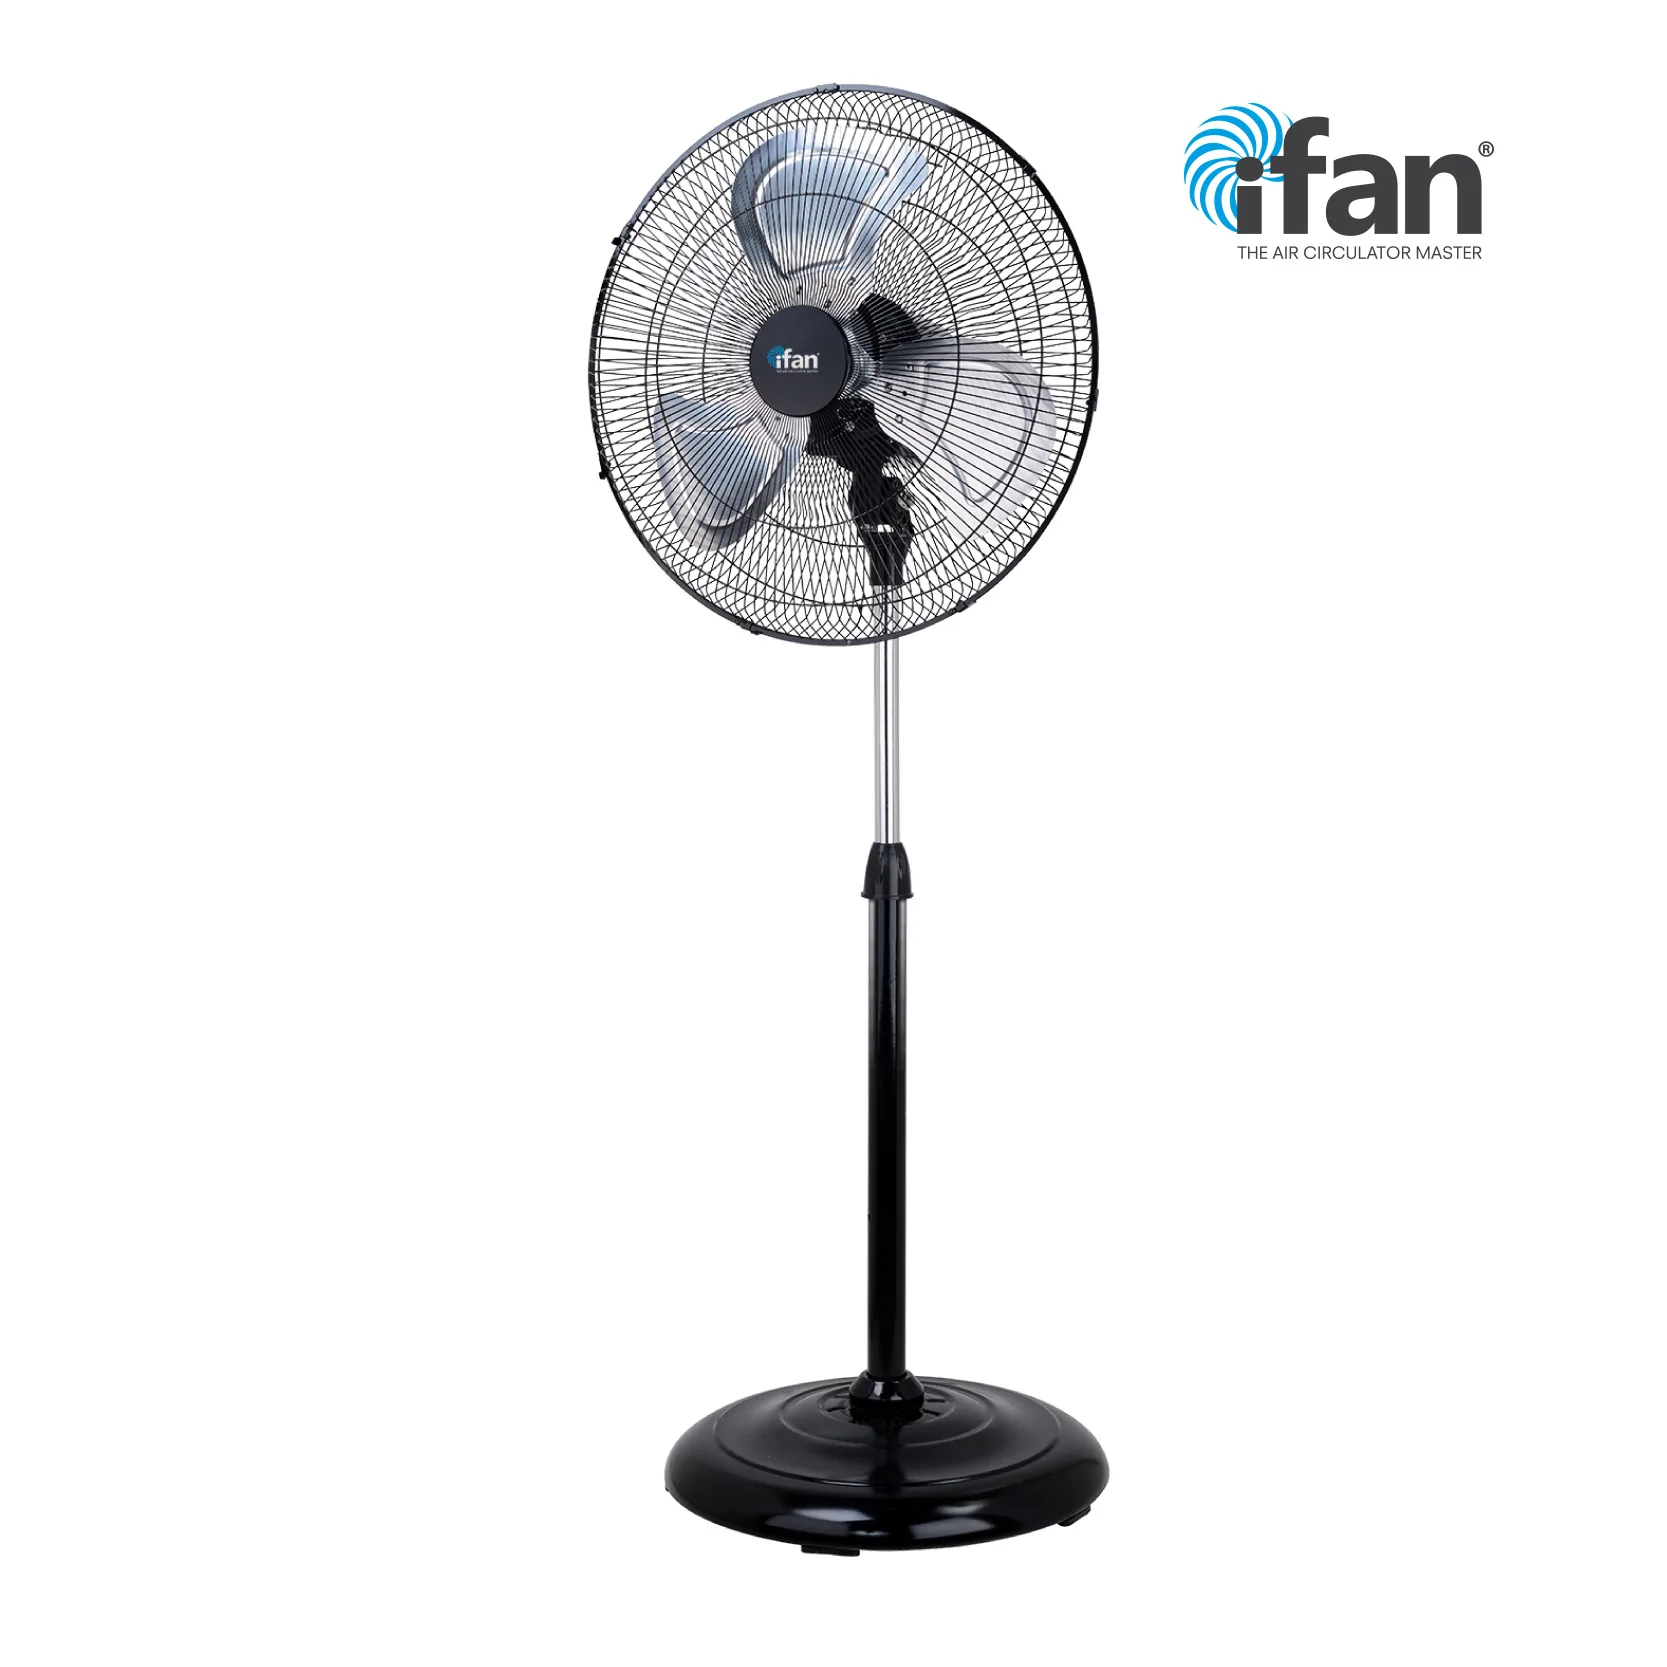 IFan METAL Stand Fan 20"/500MM High VELOCITY Fan Air Circulator 130W